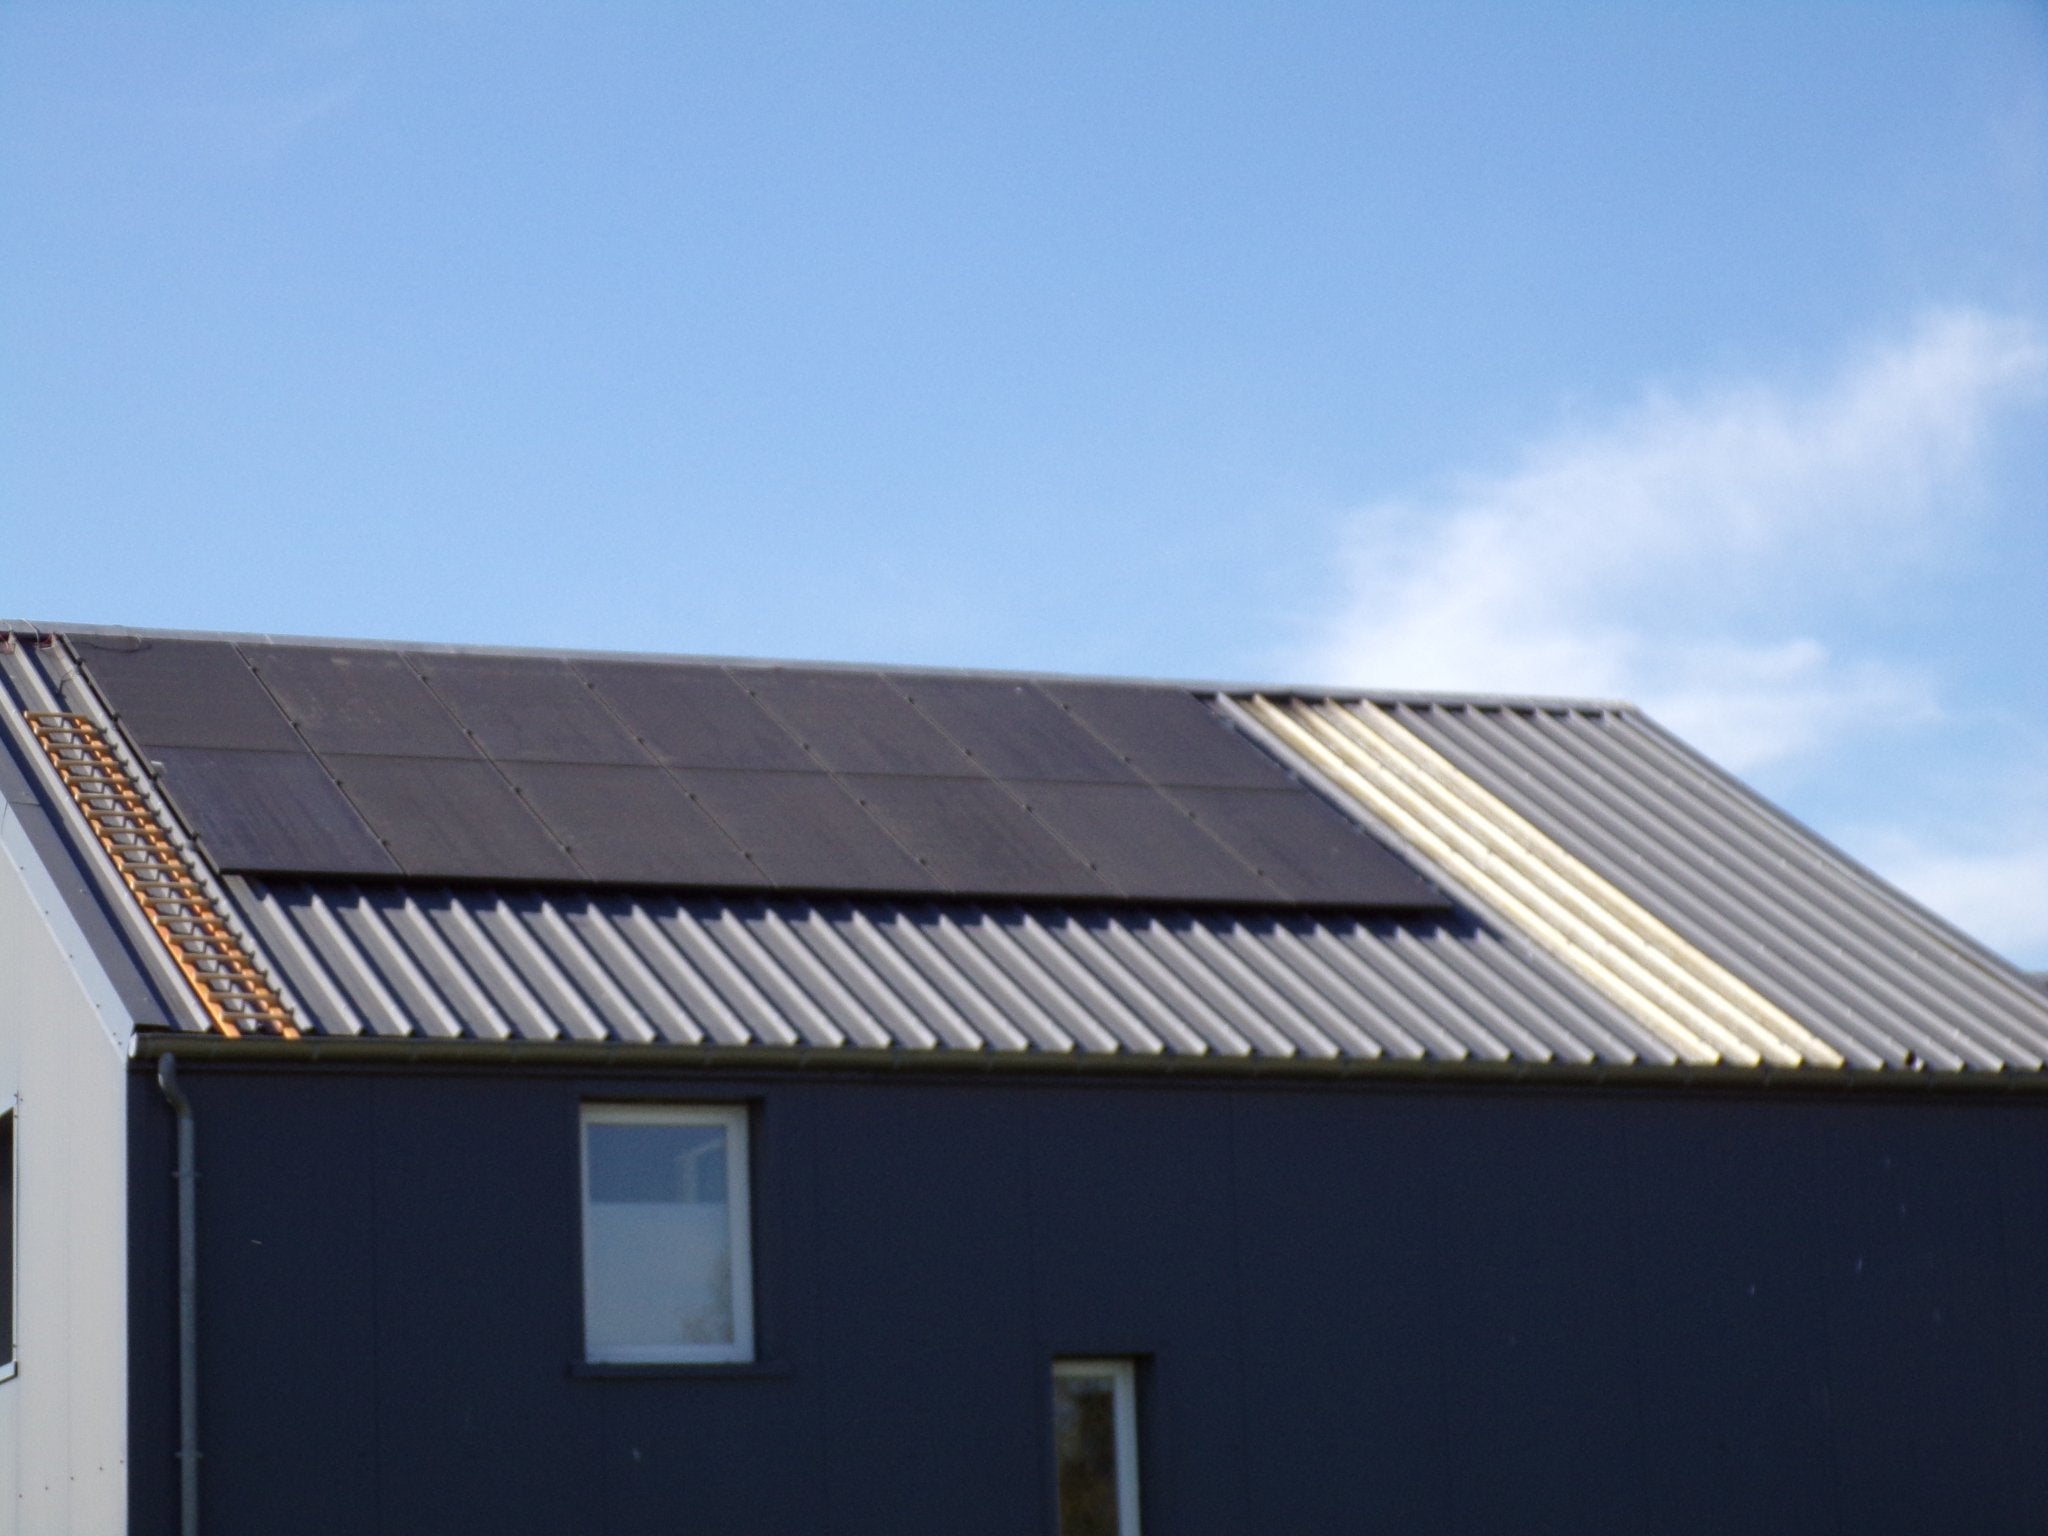 Installations solaires voltaïques depuis 2011 | prov. Luxembourg belge - MultiShop.lu